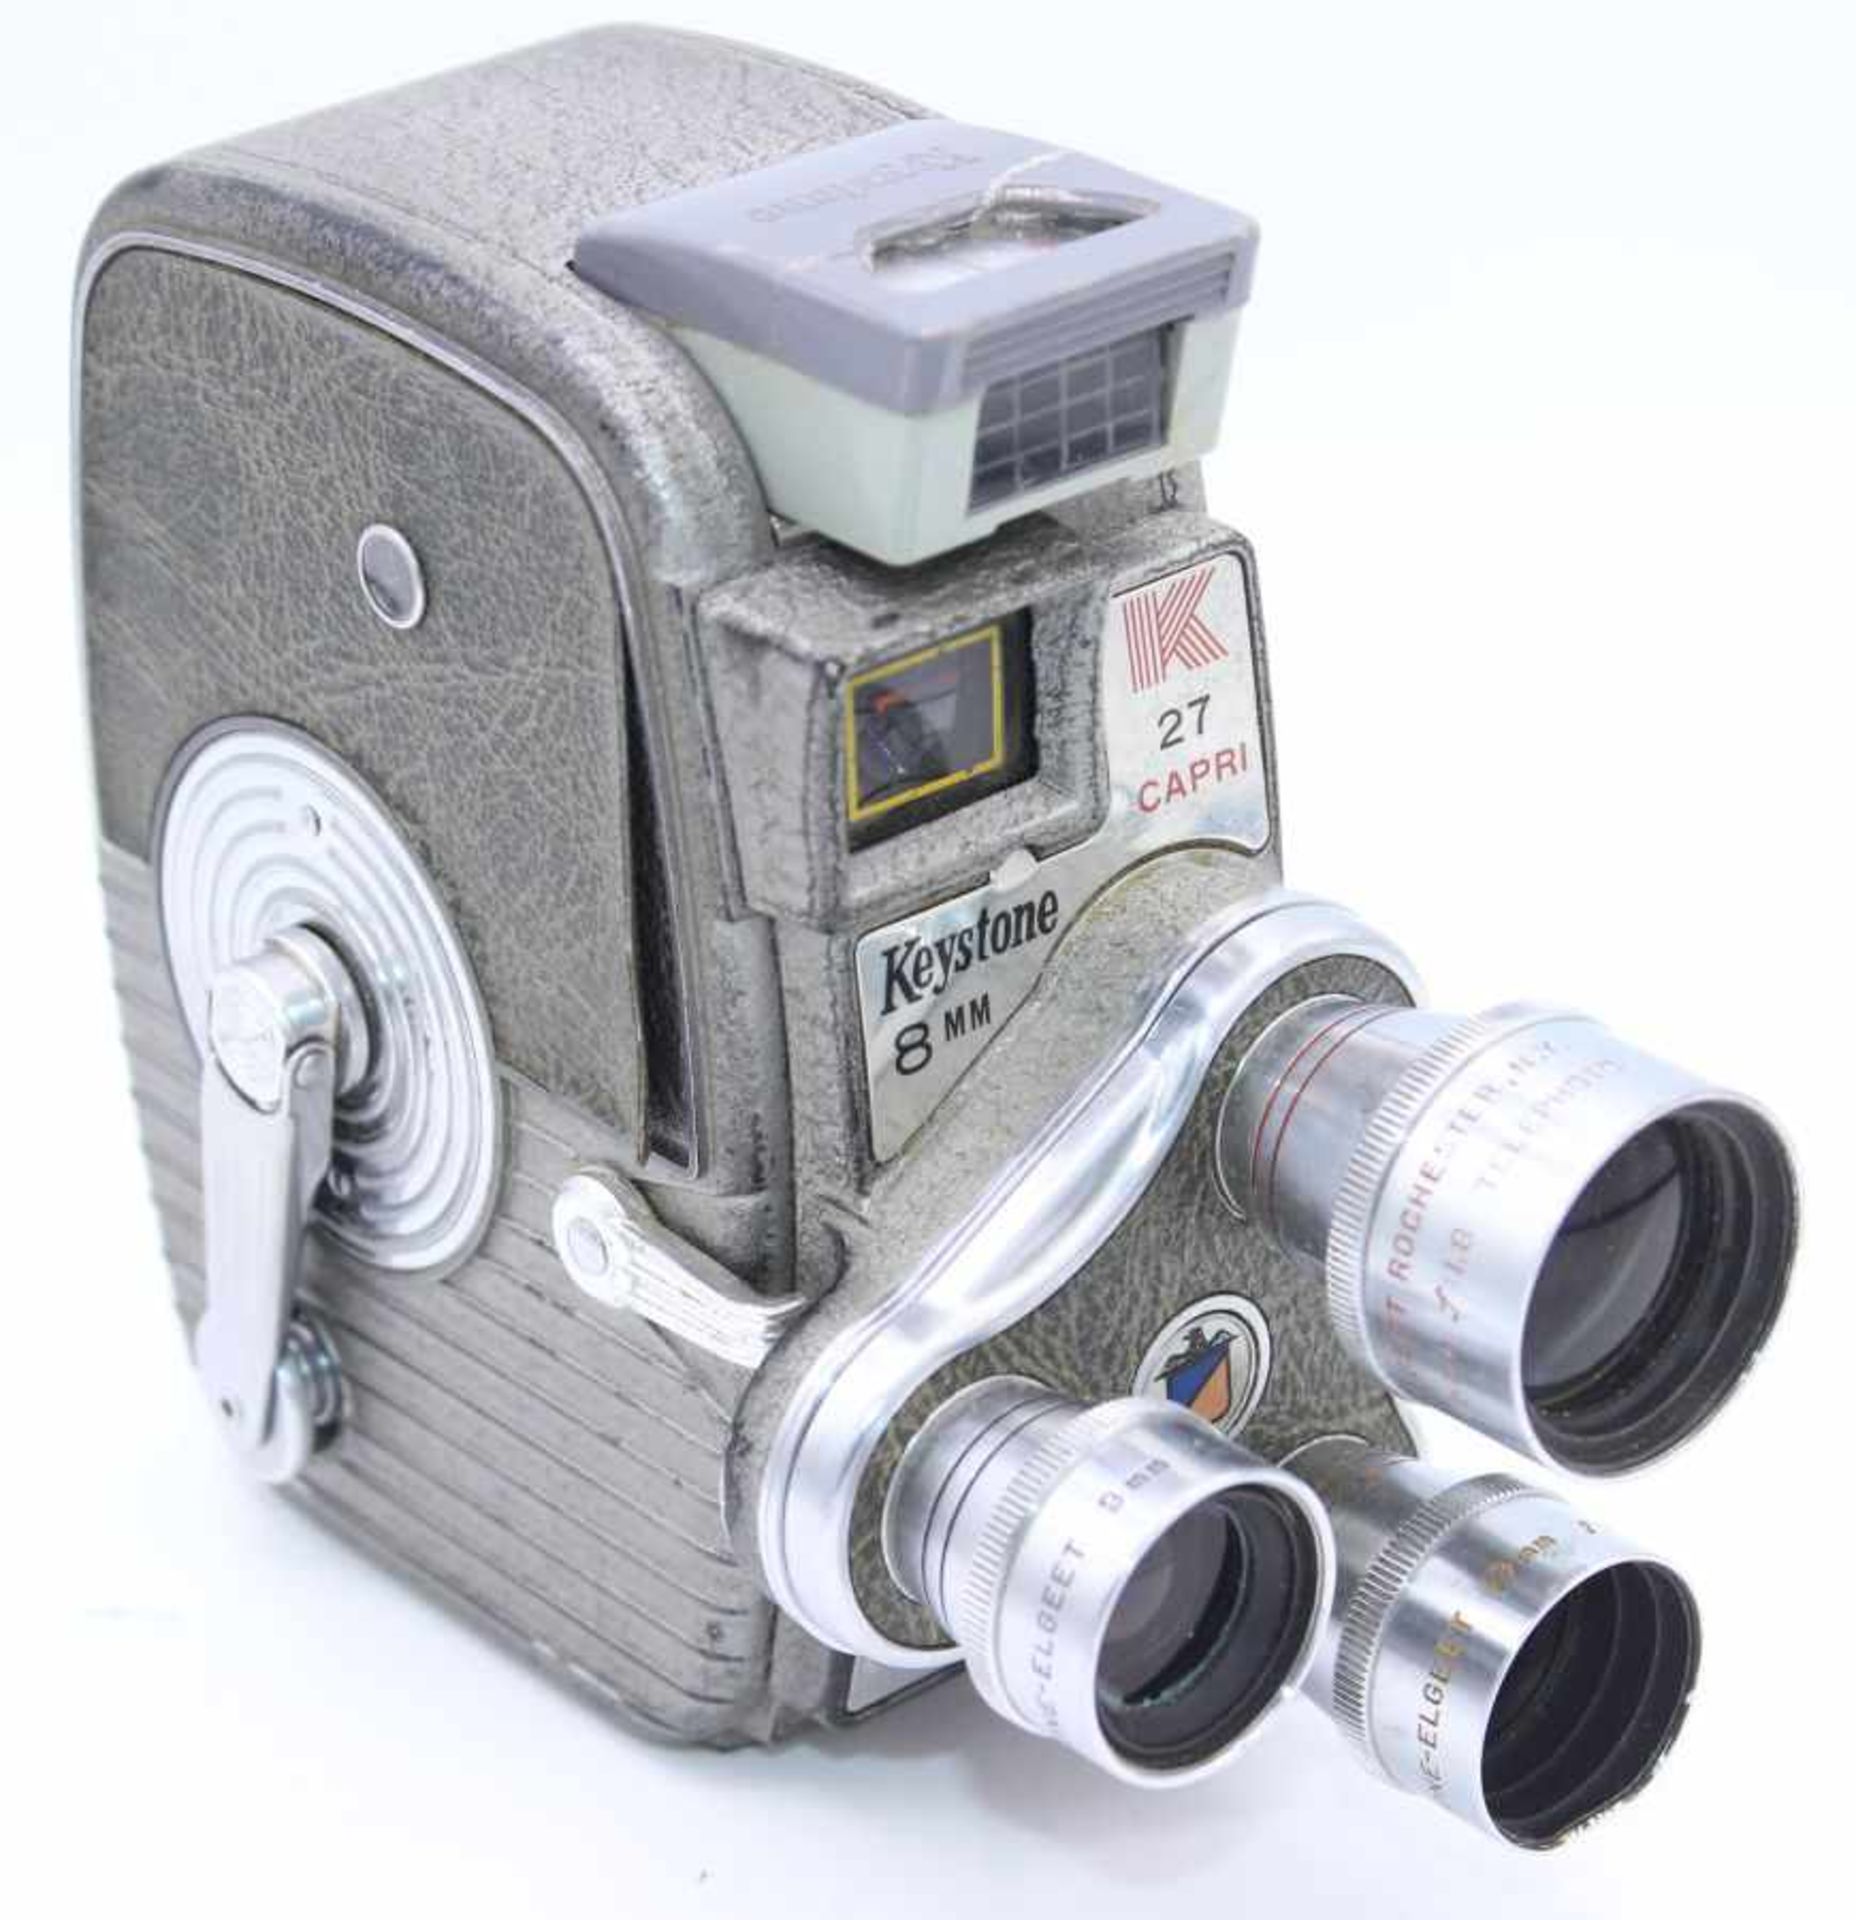 Alte Filmkamera mit Revolverobjektiv Marke Keystone 8MM, K 27 Capri, Metallgehäuse, Höhe ca. 12,5